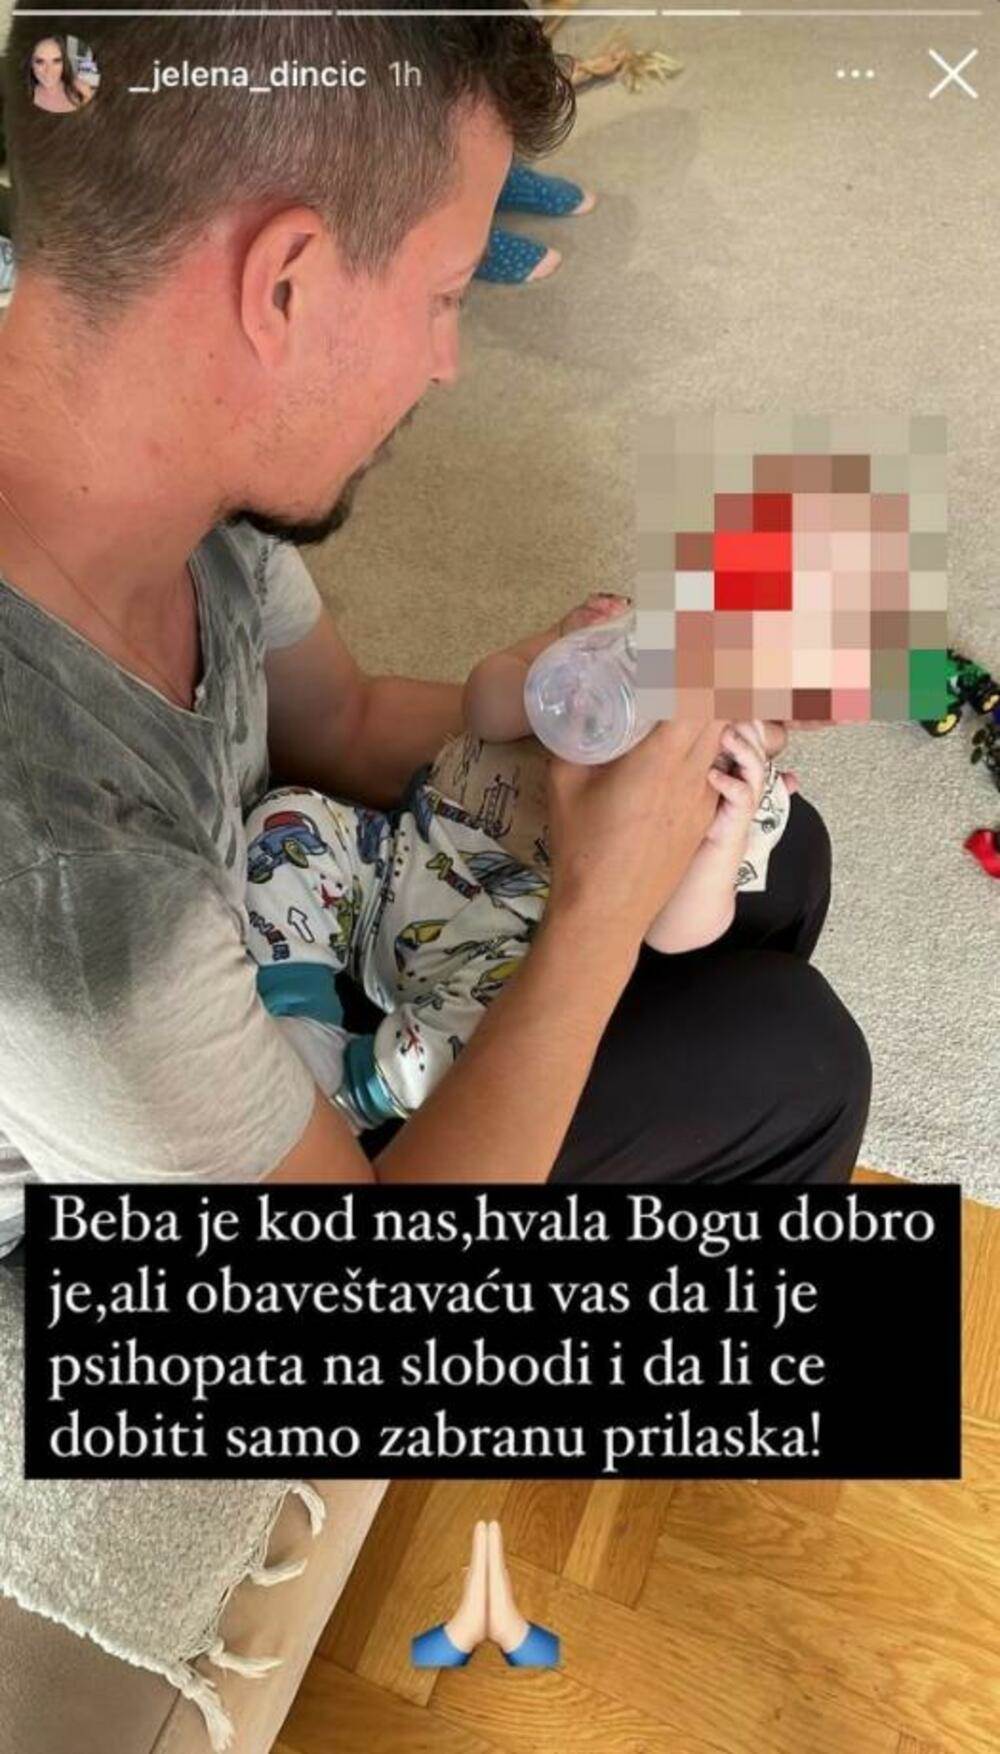  Milan i Jelena Dinčić pomogli pretučenoj bebi 